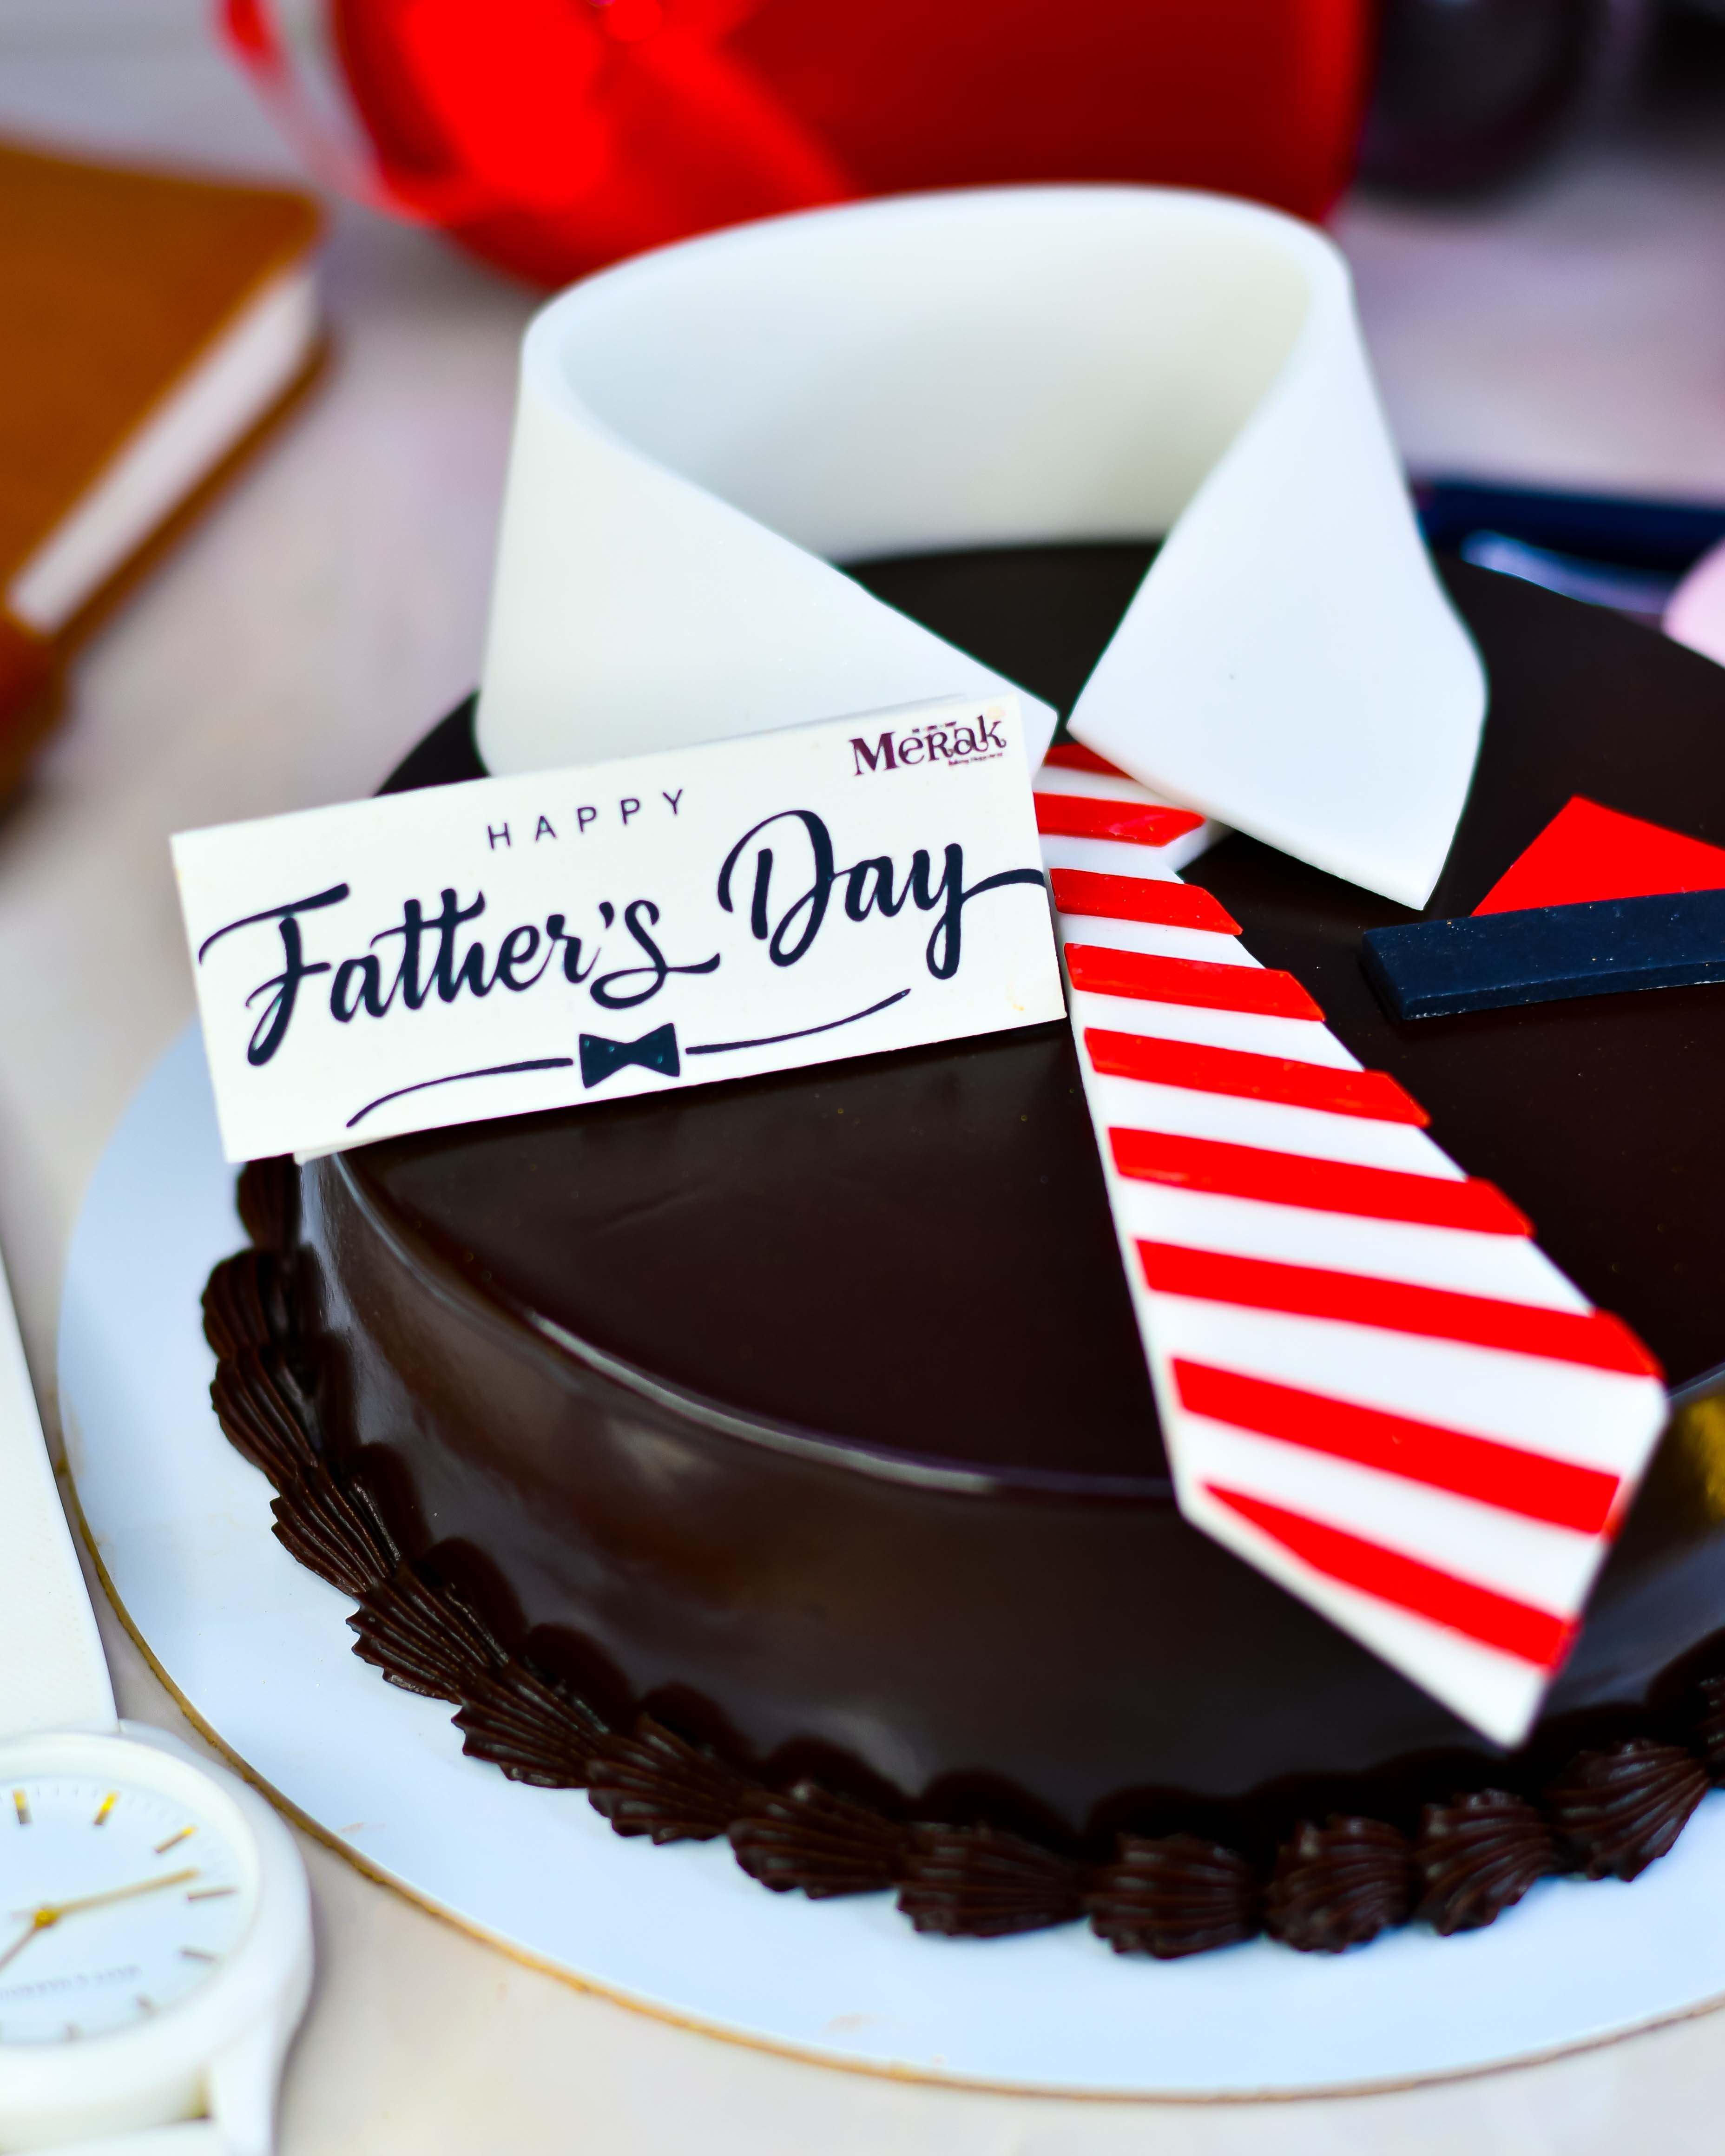 Happy Father's Day Cake - Cake'O'Clocks